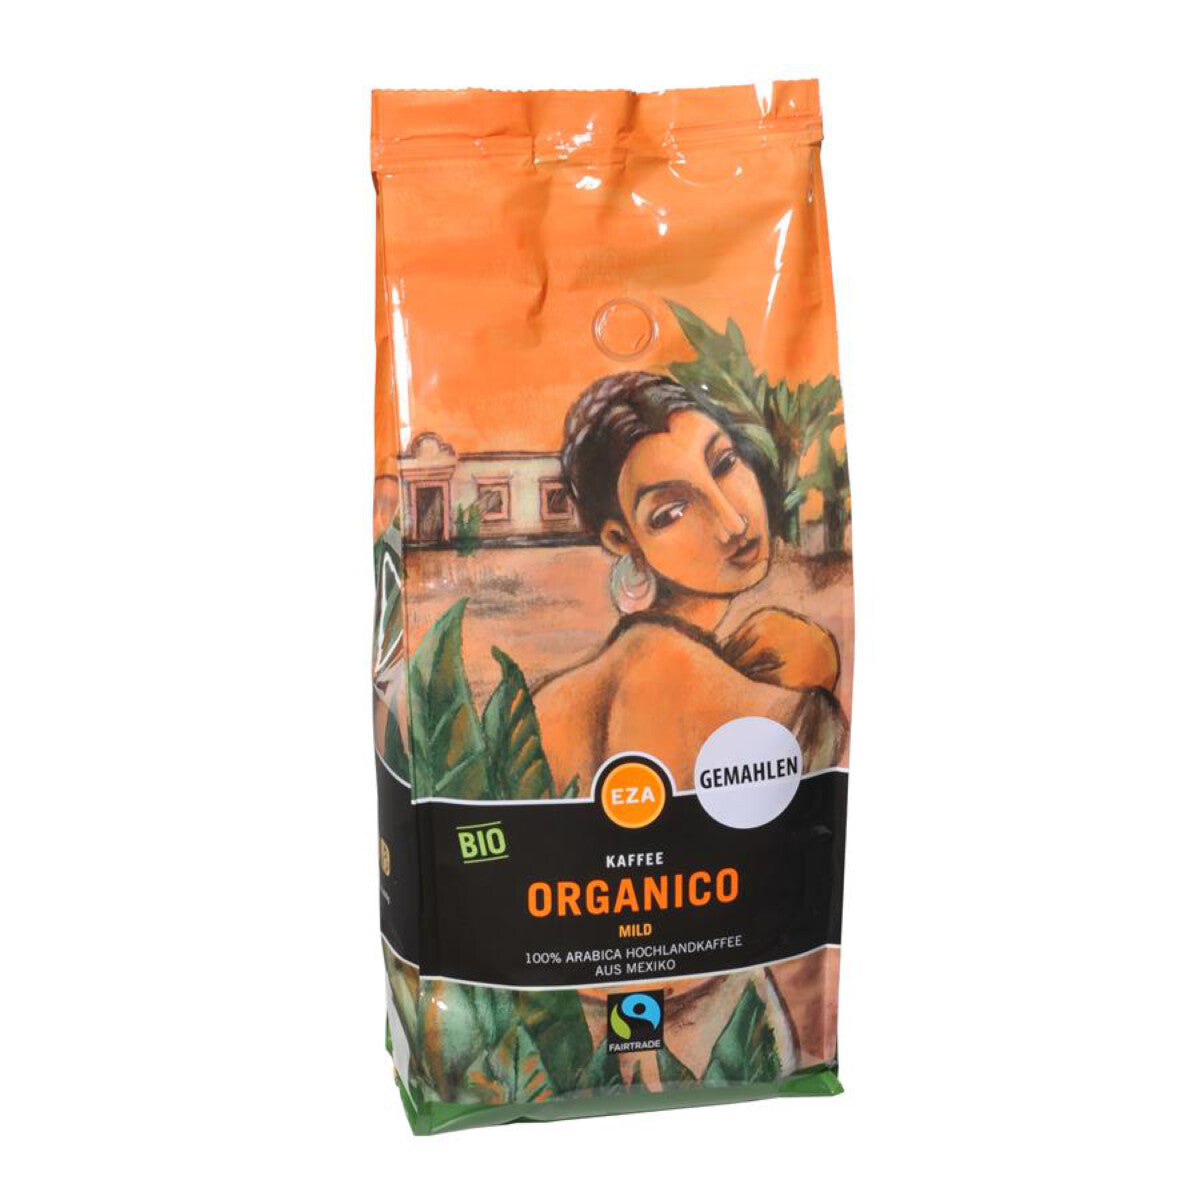 EZA Kaffee Organico mild, gemahlen - 1 kg